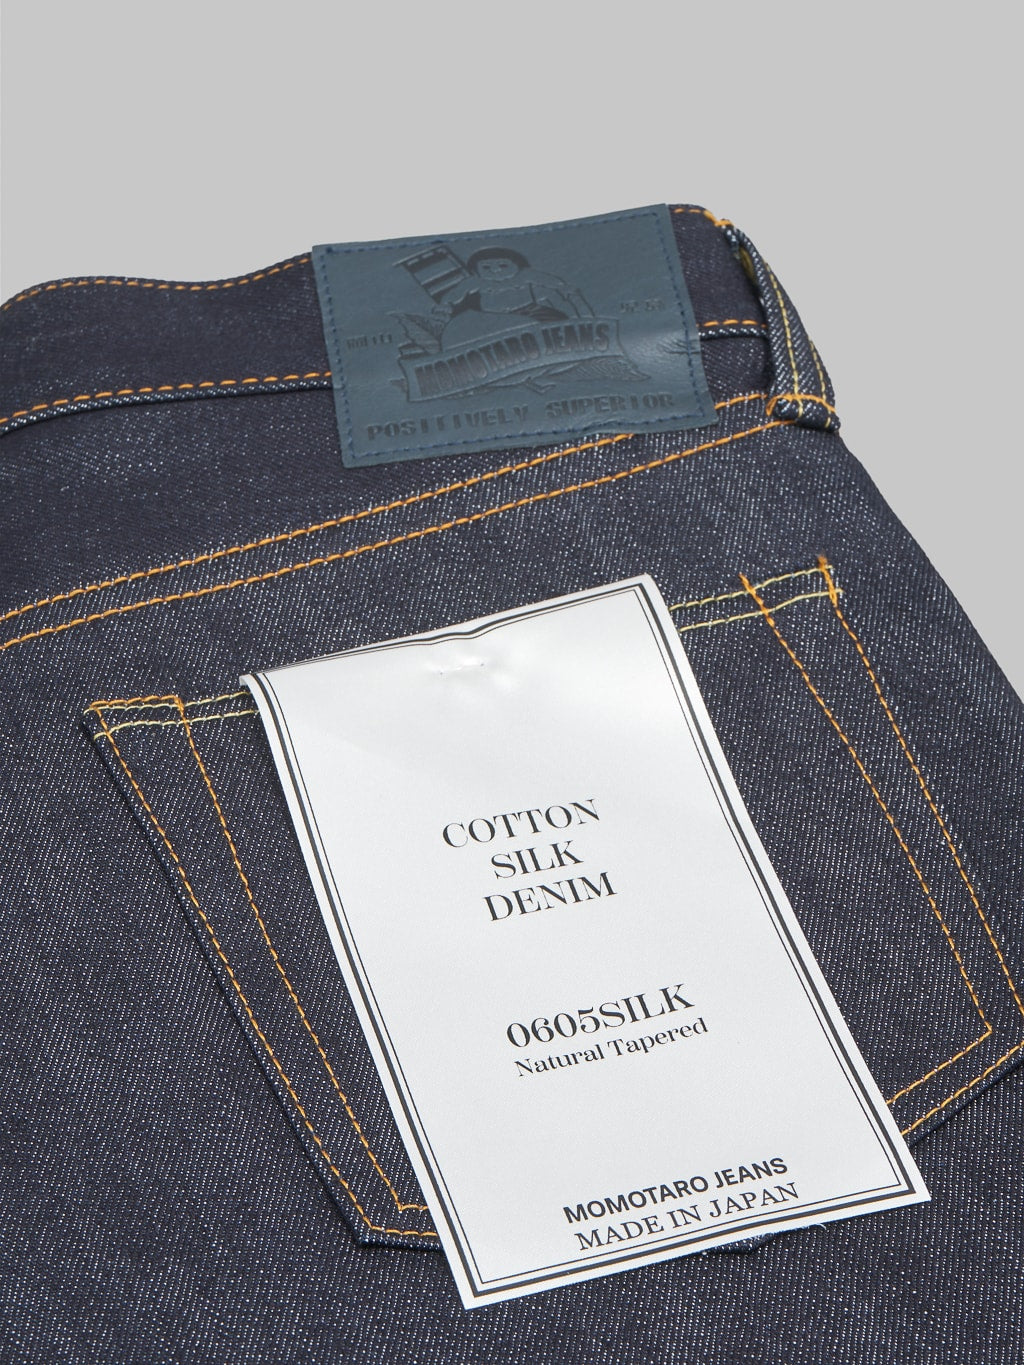 Momotaro 0605SILK Denim Natural Tapered Jeans pocket flasher